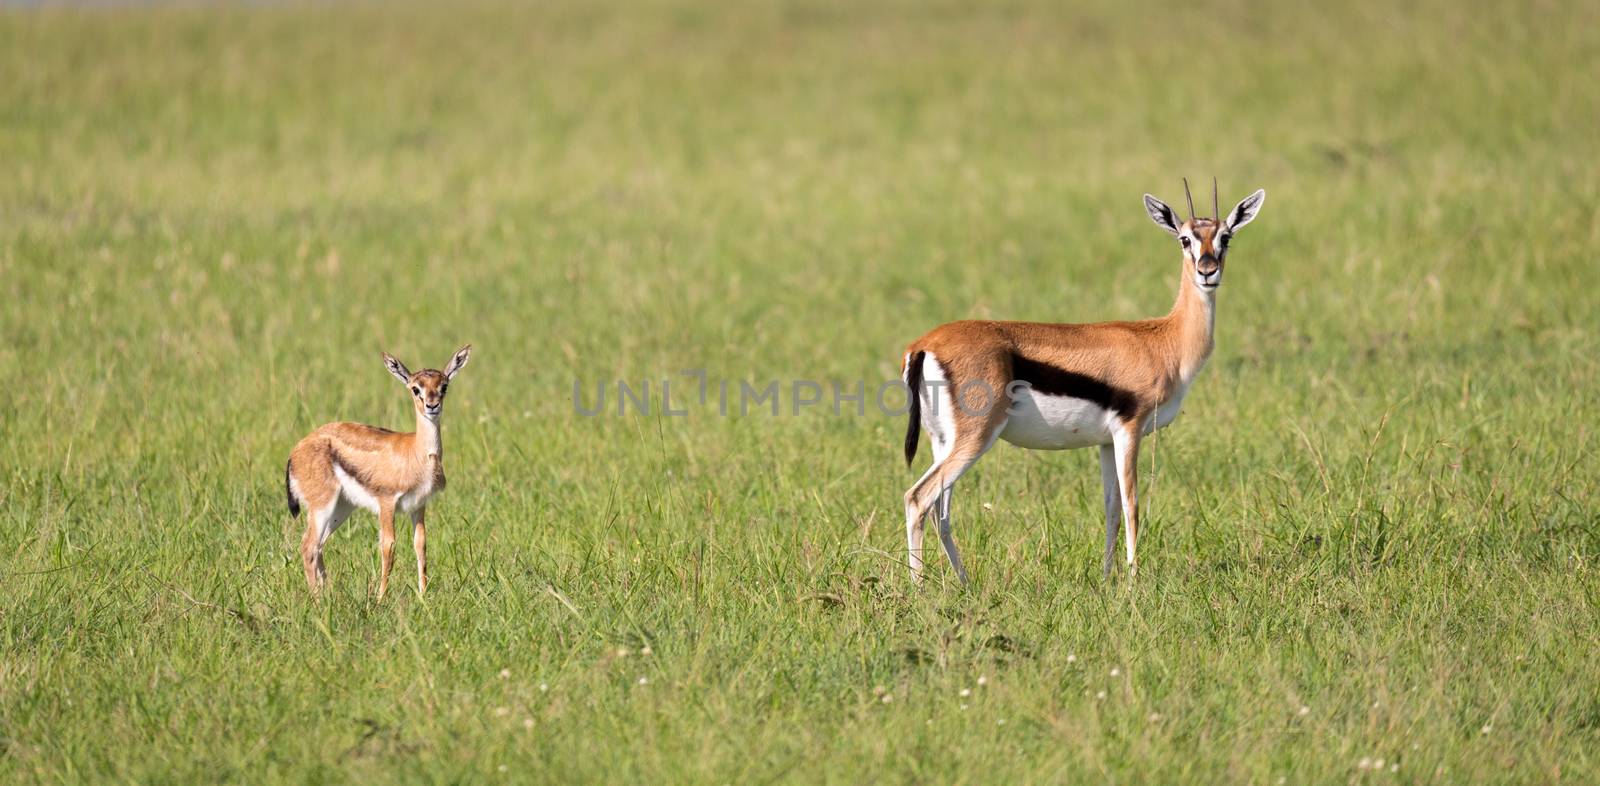 The family of Thomson gazelles in the savannah of Kenya